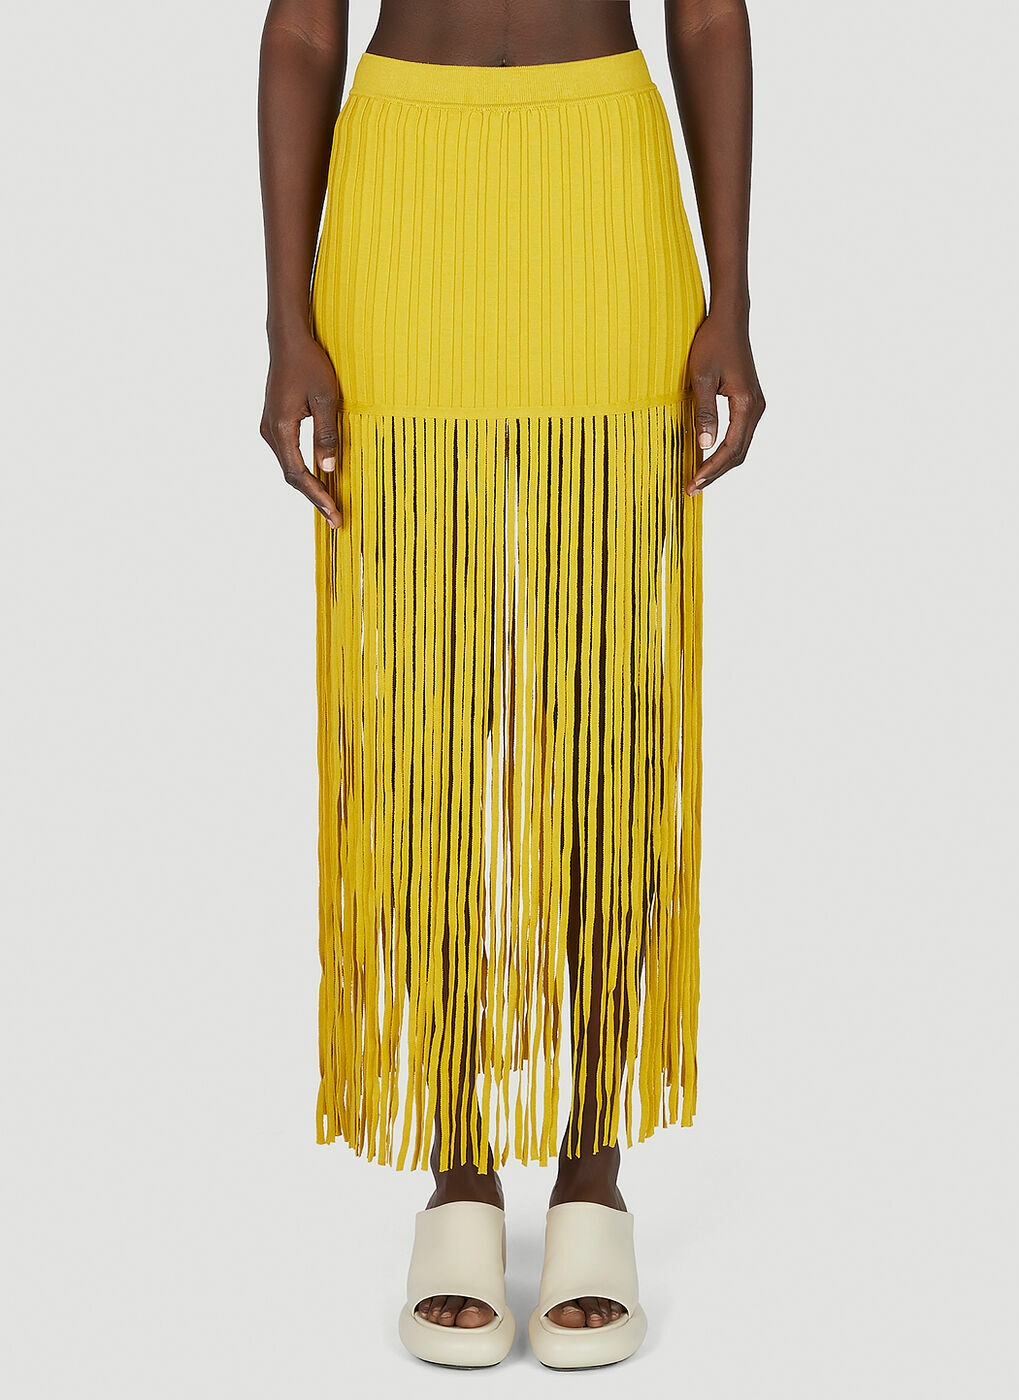 SIMON MILLER - Twizz Skirt in Yellow